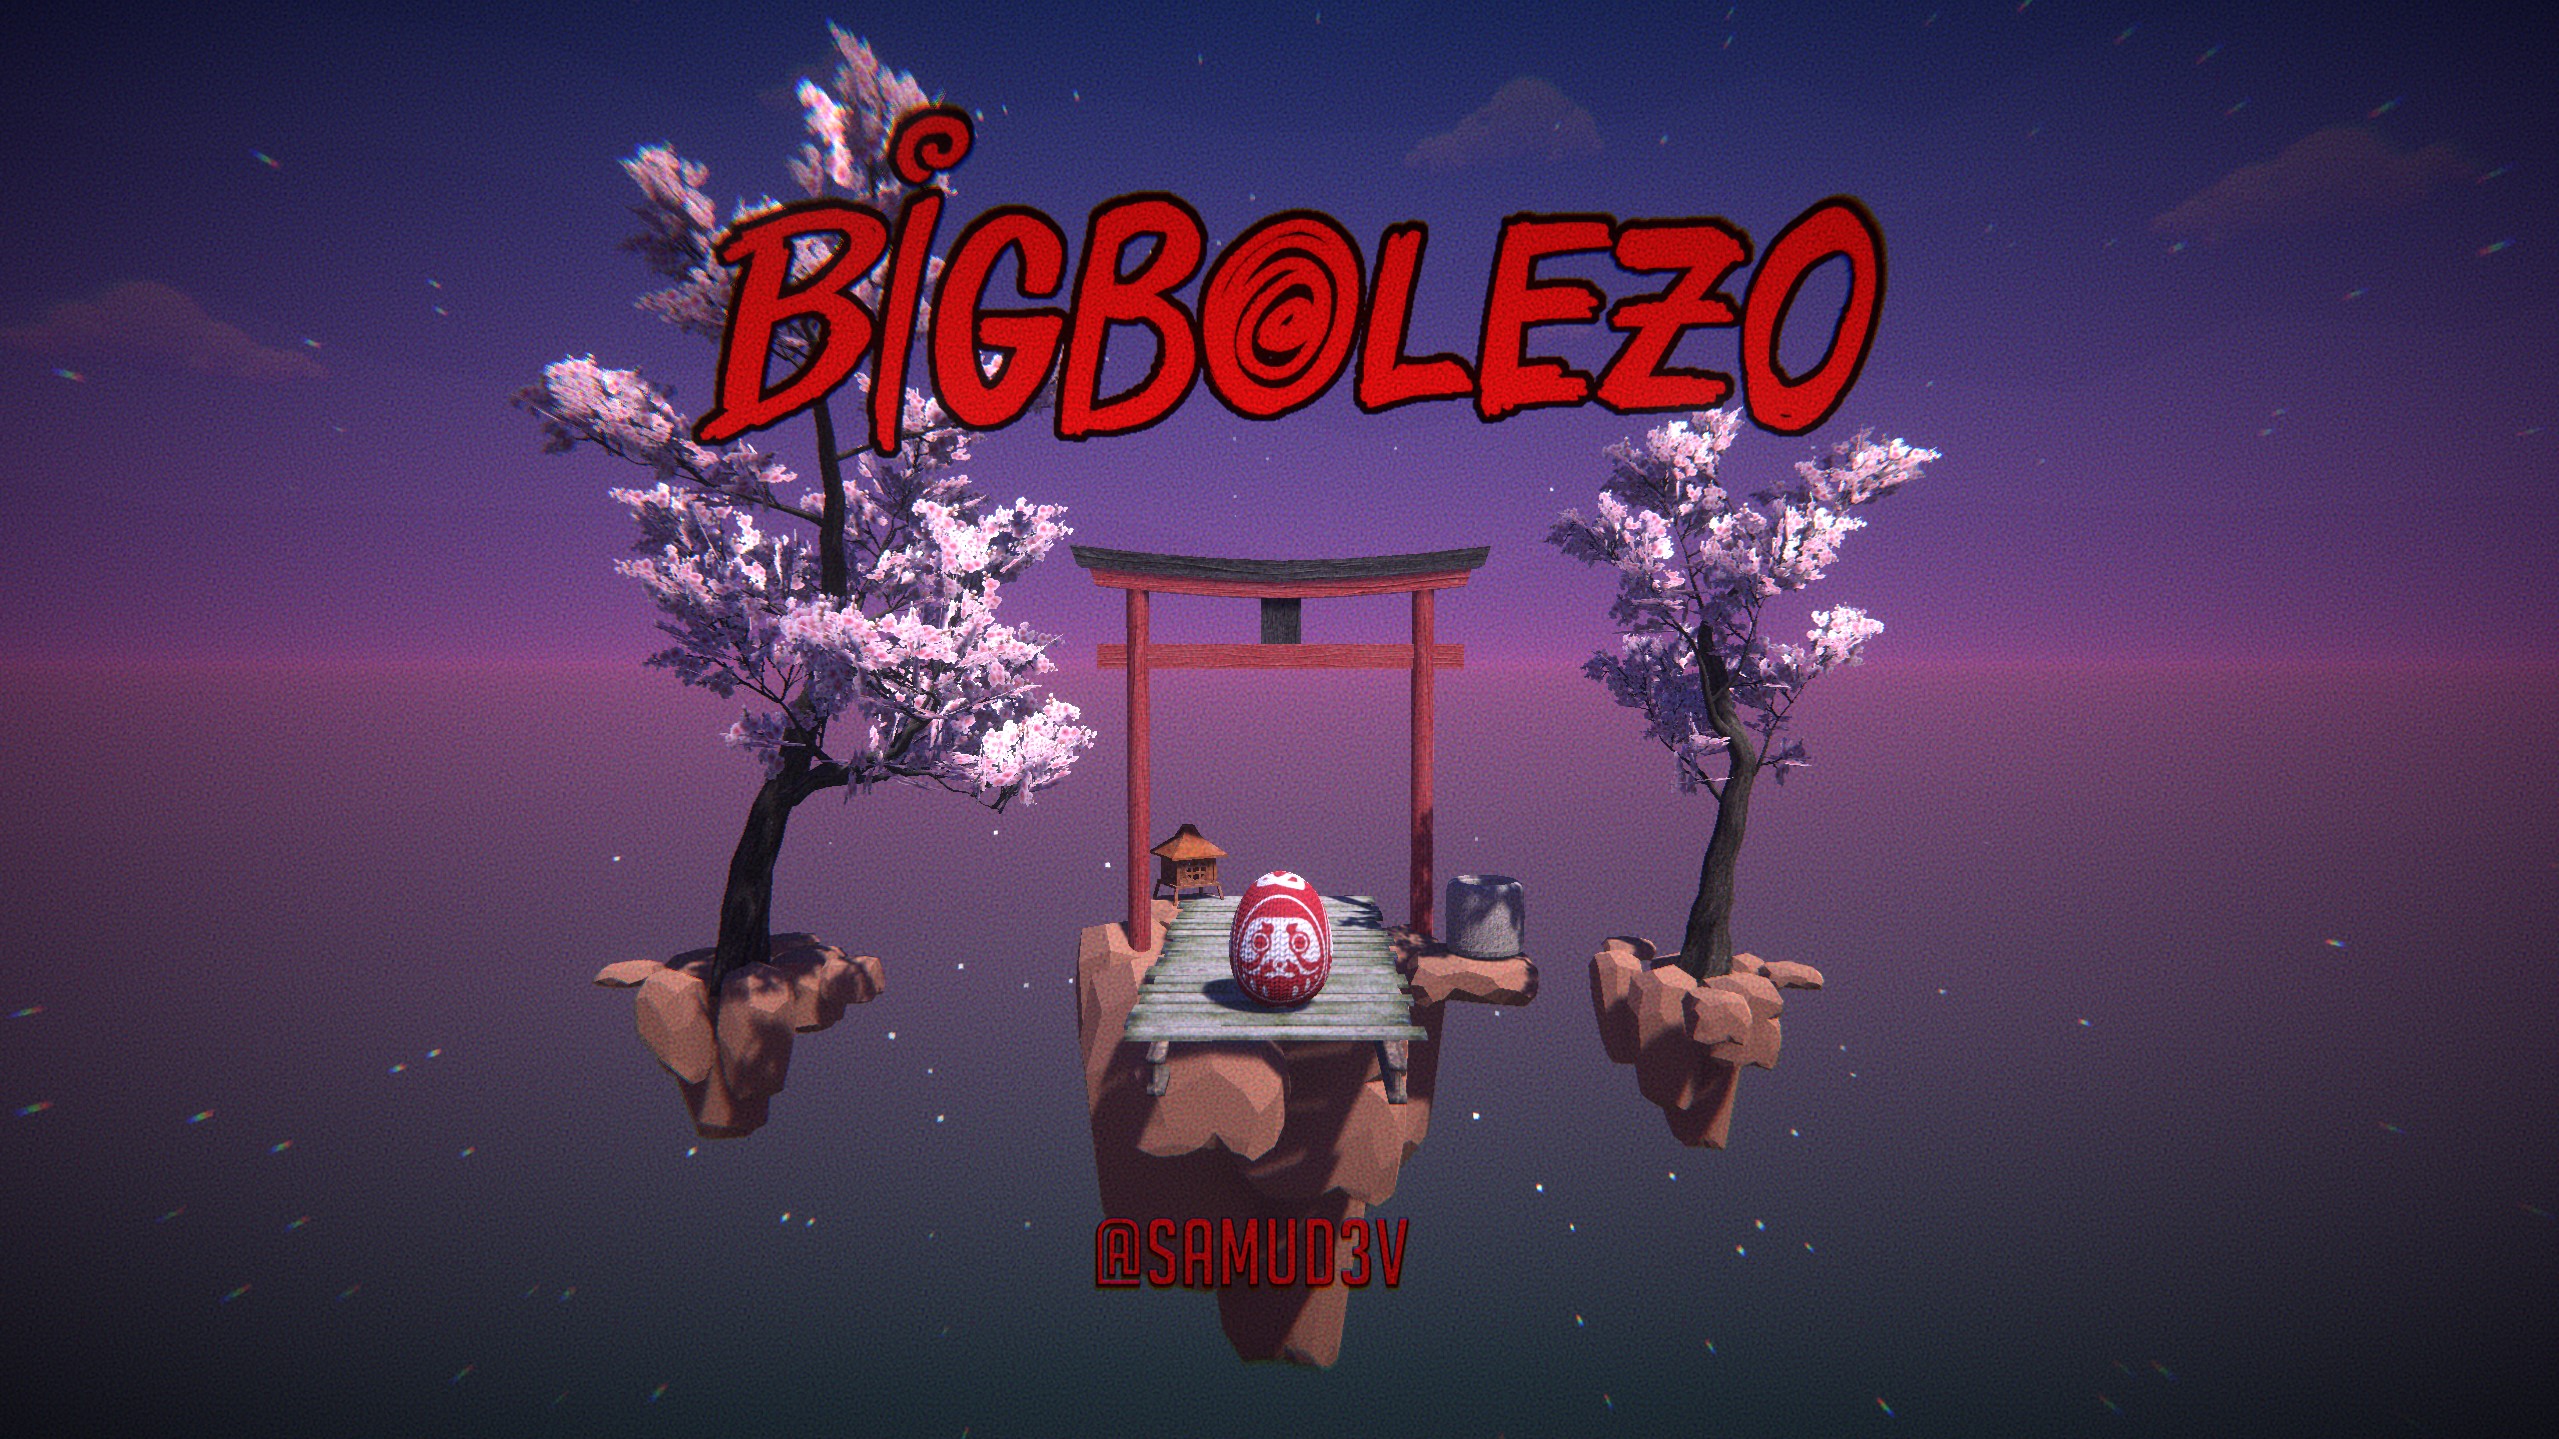 BigBolez0